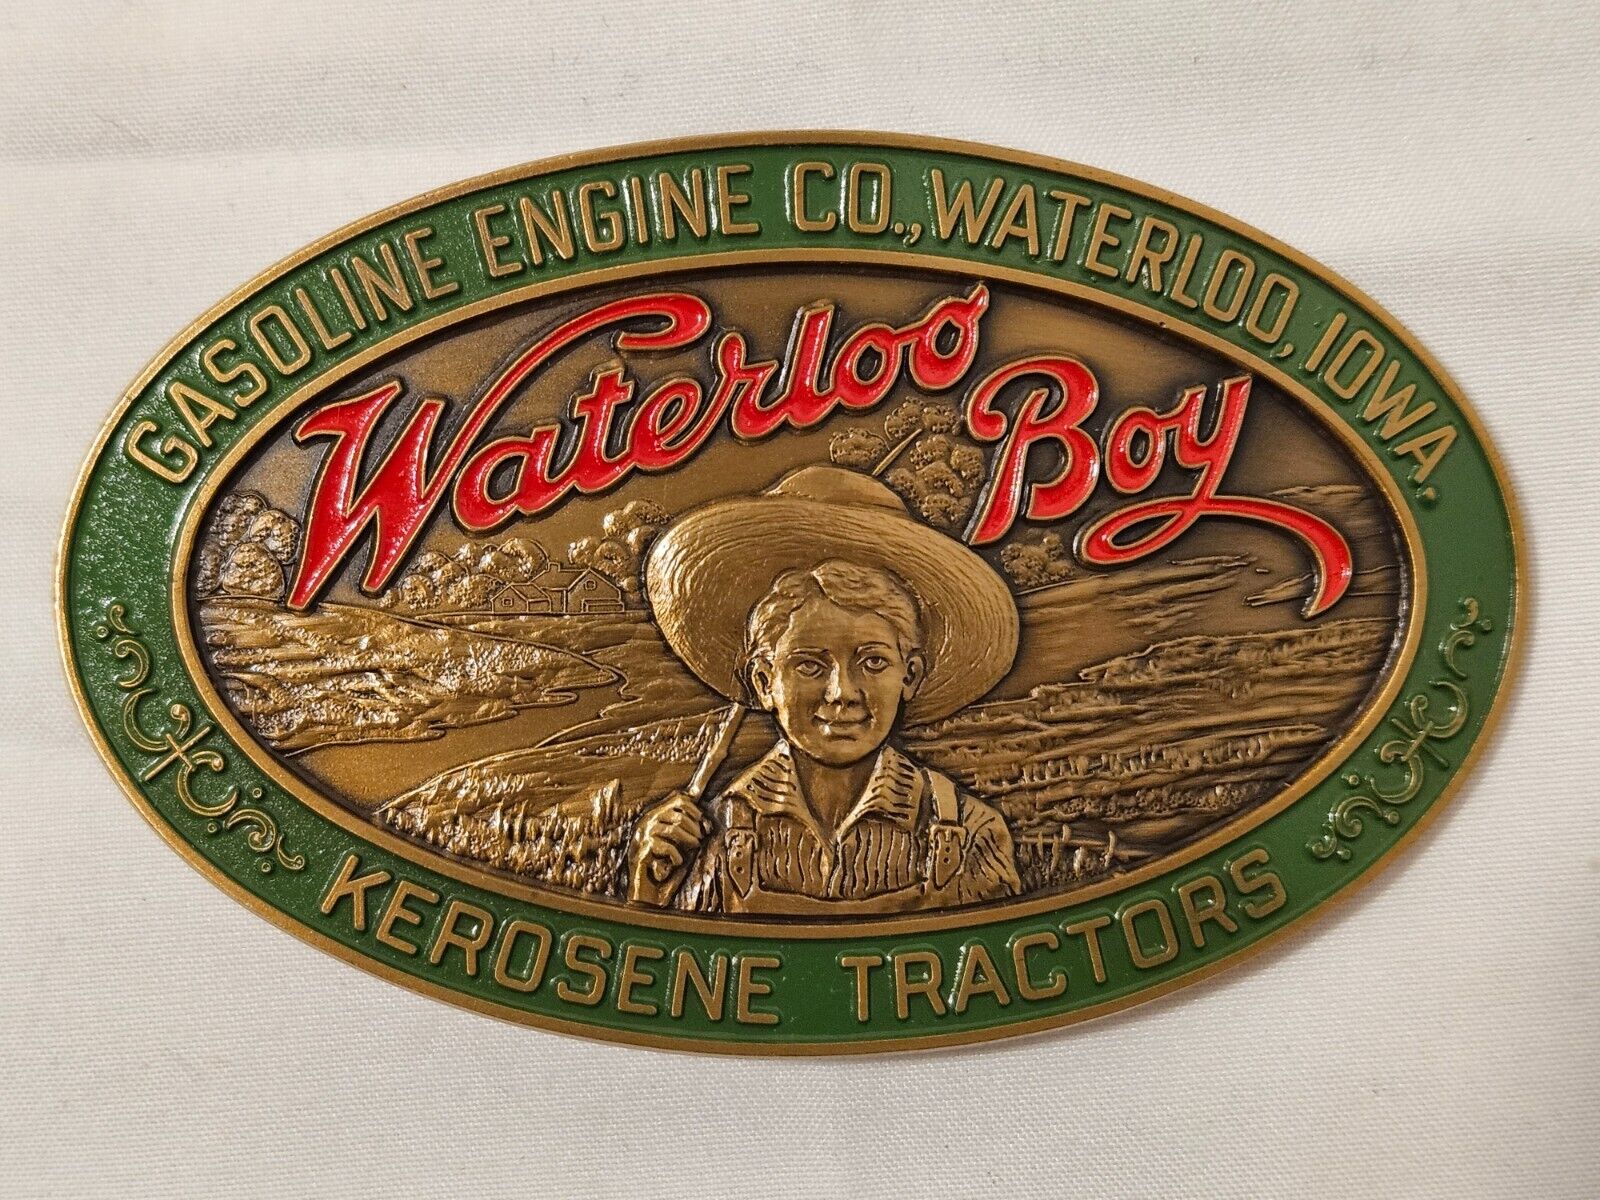 JOHN DEERE 1990 WATERLOO GASOLINE ENGINE CO WATERLOO BOY TRACTOR BELT BUCKLE